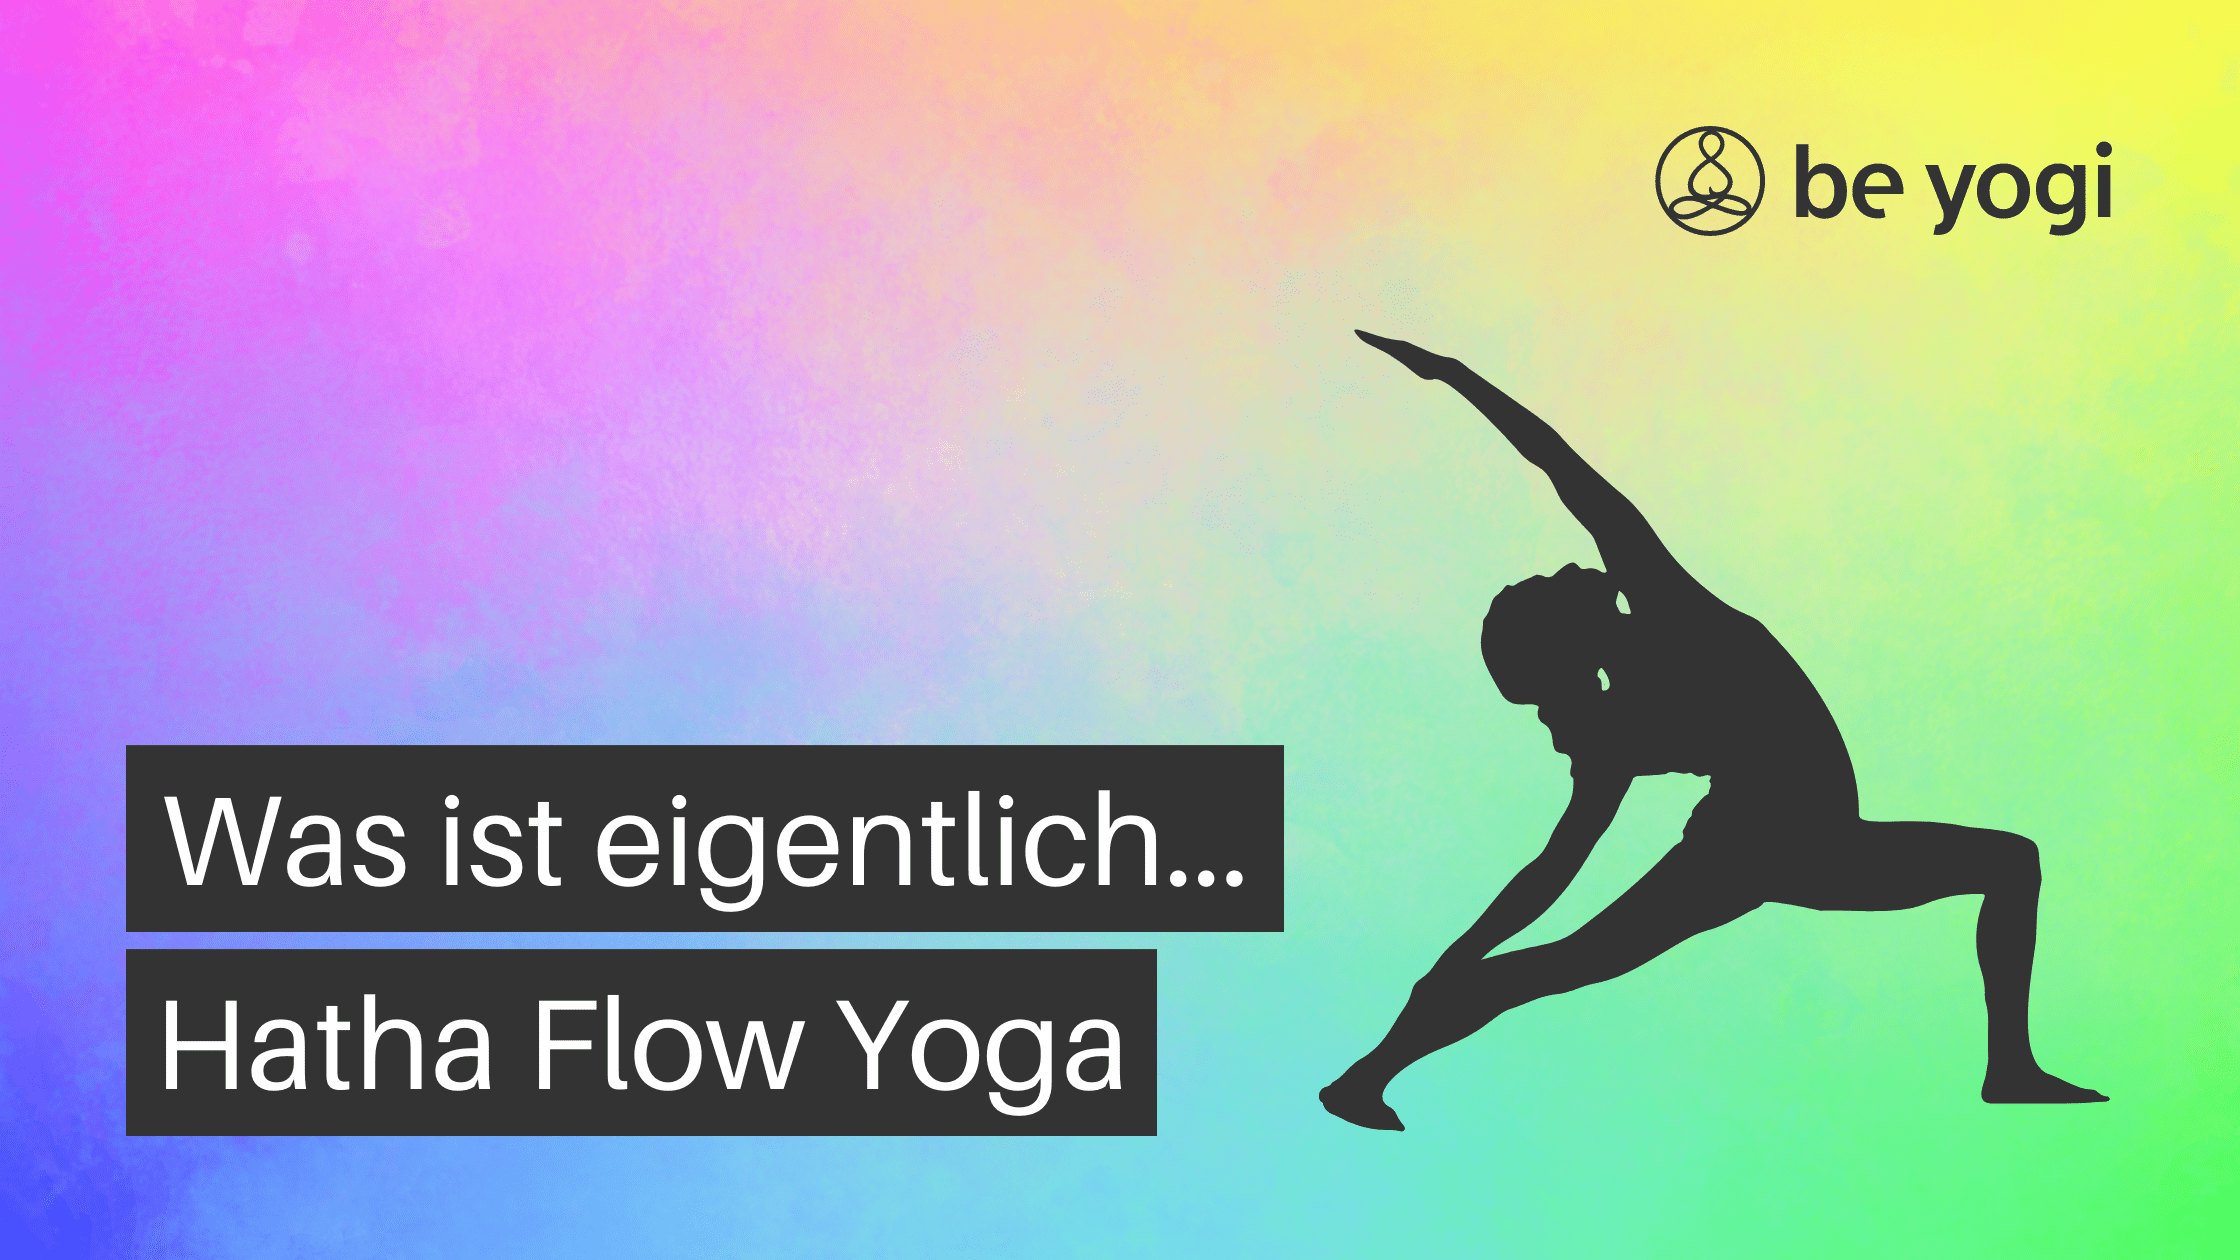 hatha flow yoga yoga stil chrakteristik typische merkmale Be Yogi Artikel yoga ayurveda